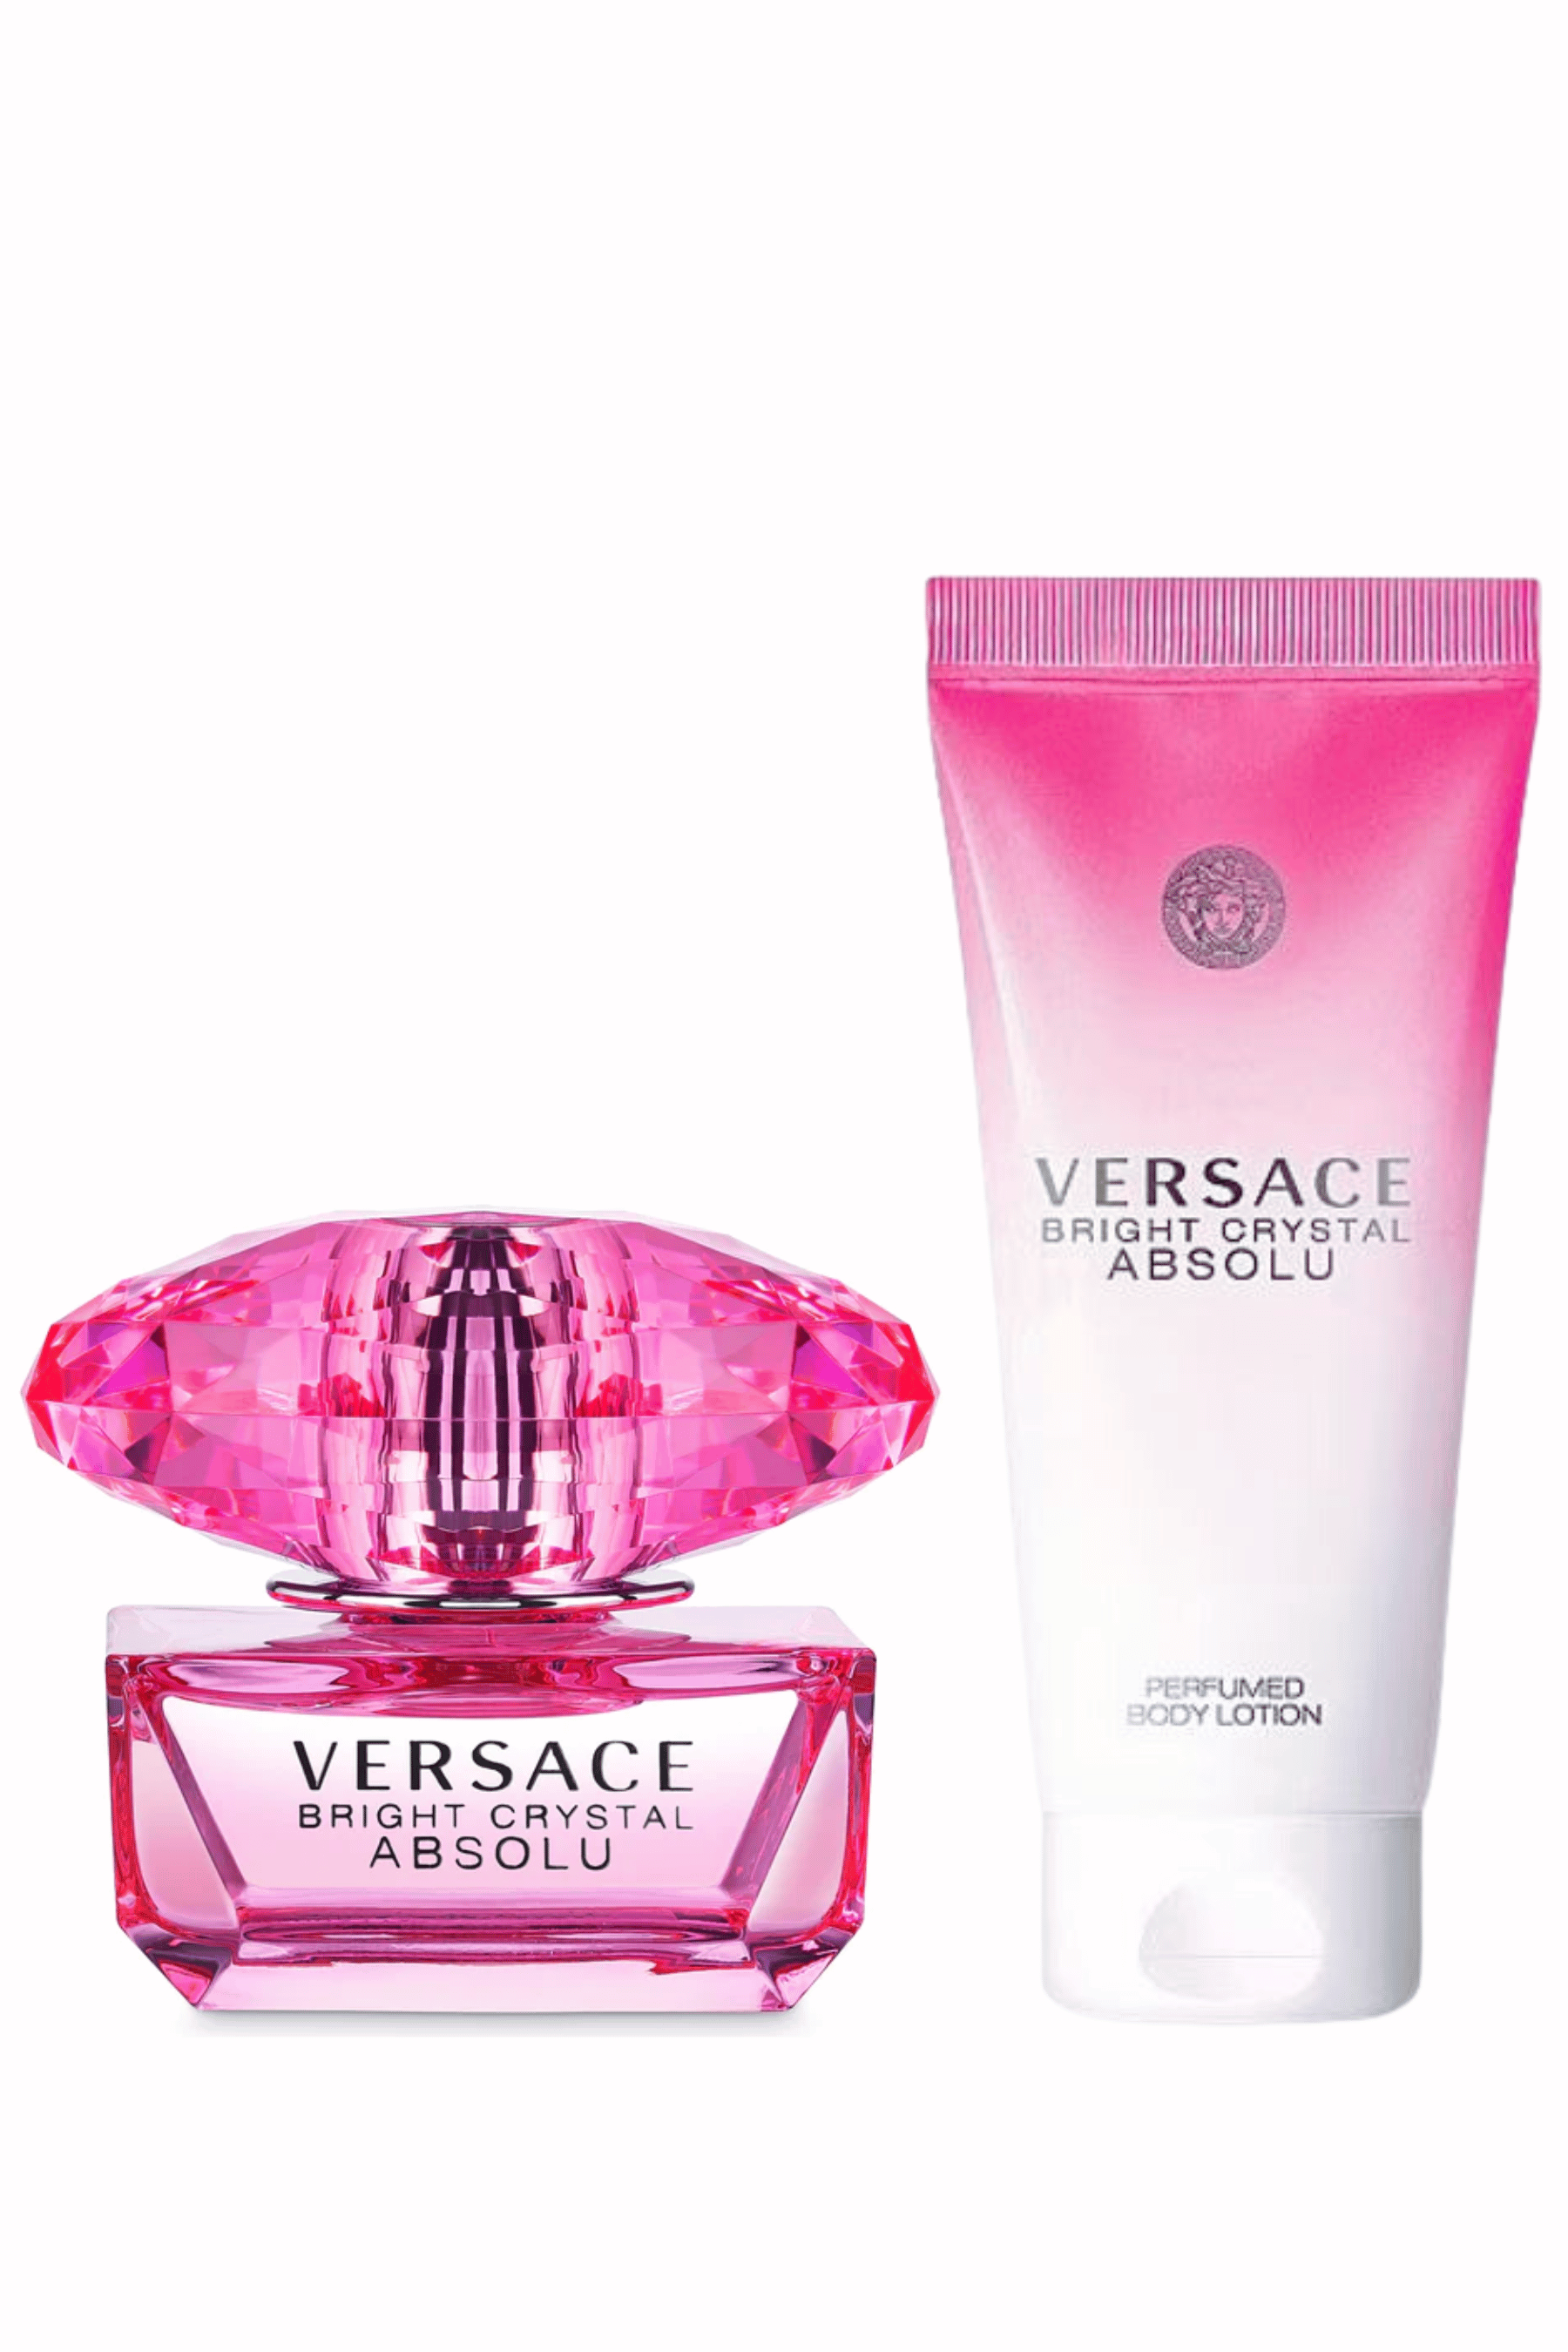 Versace de Bright Piece | Set Parfum 2 - Eau Absolu REBL Crystal